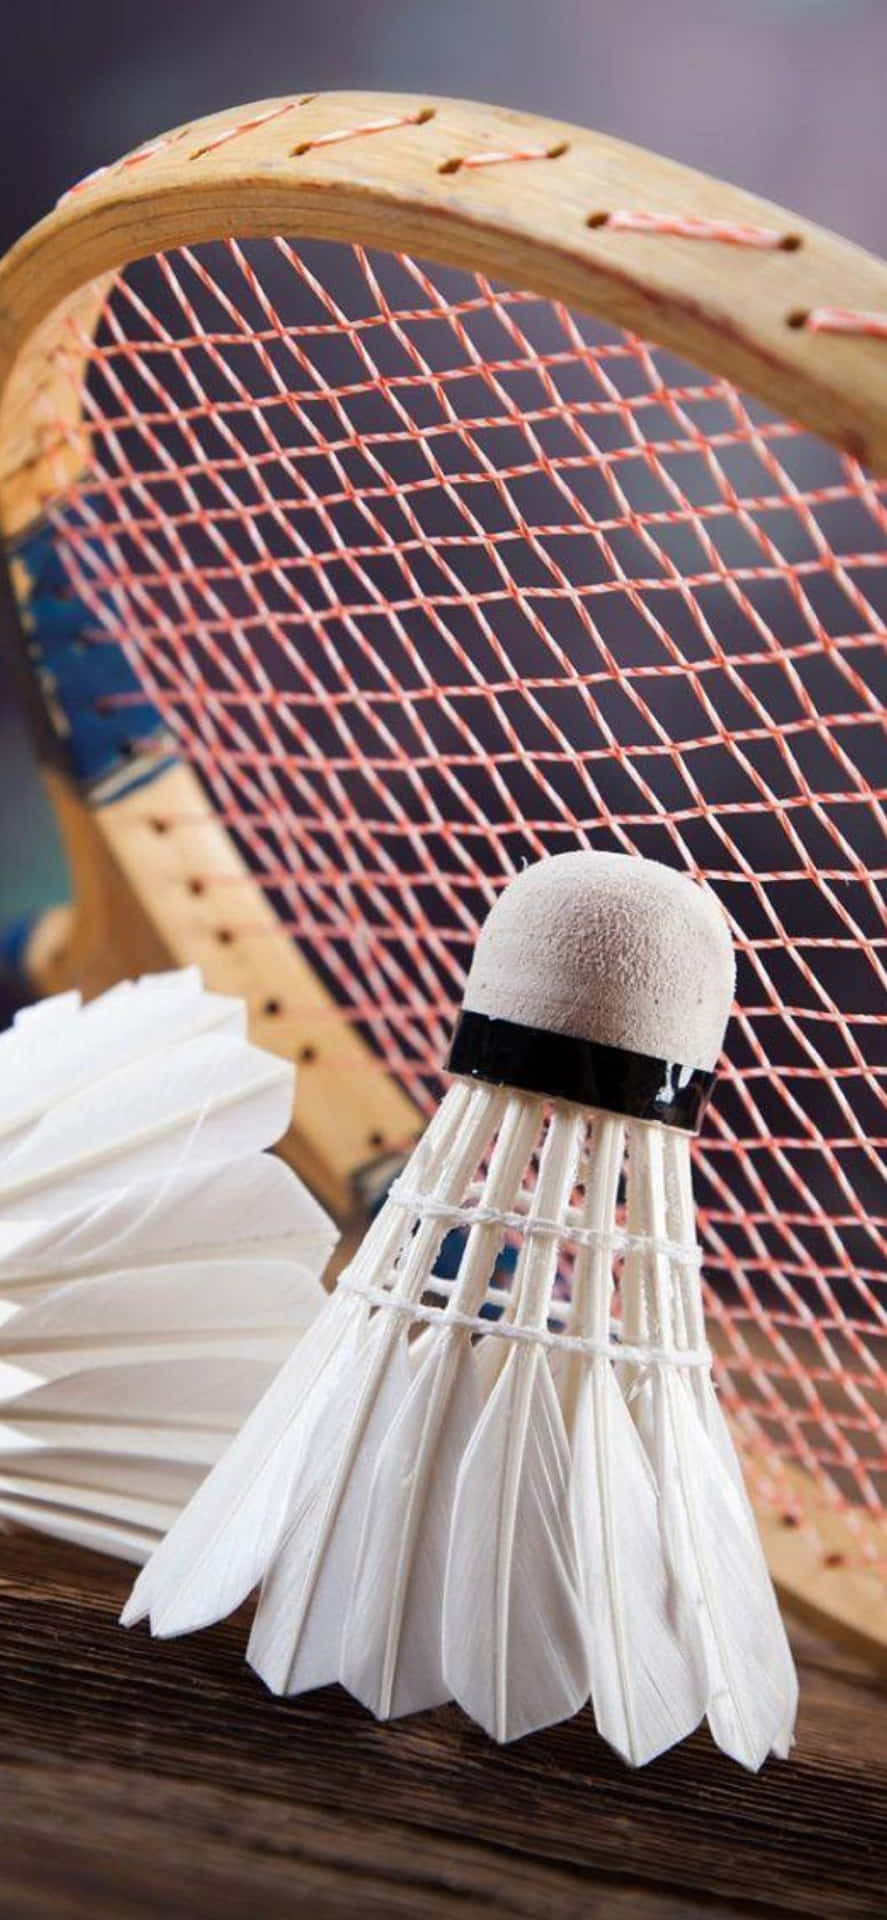 Iphone Xs Badminton Background Wallpaper